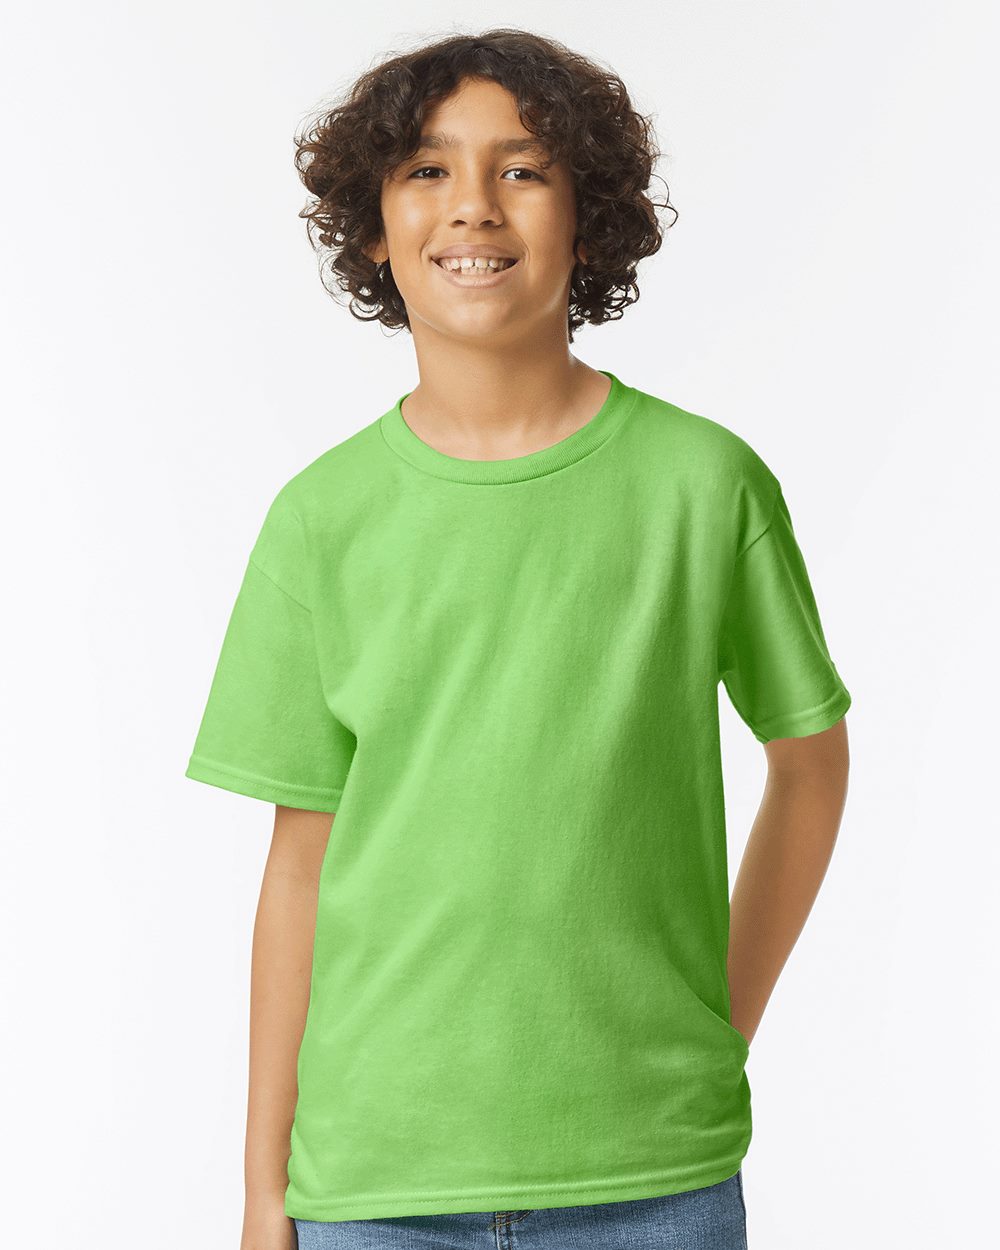 Gildan Mens Ultra Cotton T-Shirt Short Sleeve Unisex Tee S-5XL All Colors2000 PI